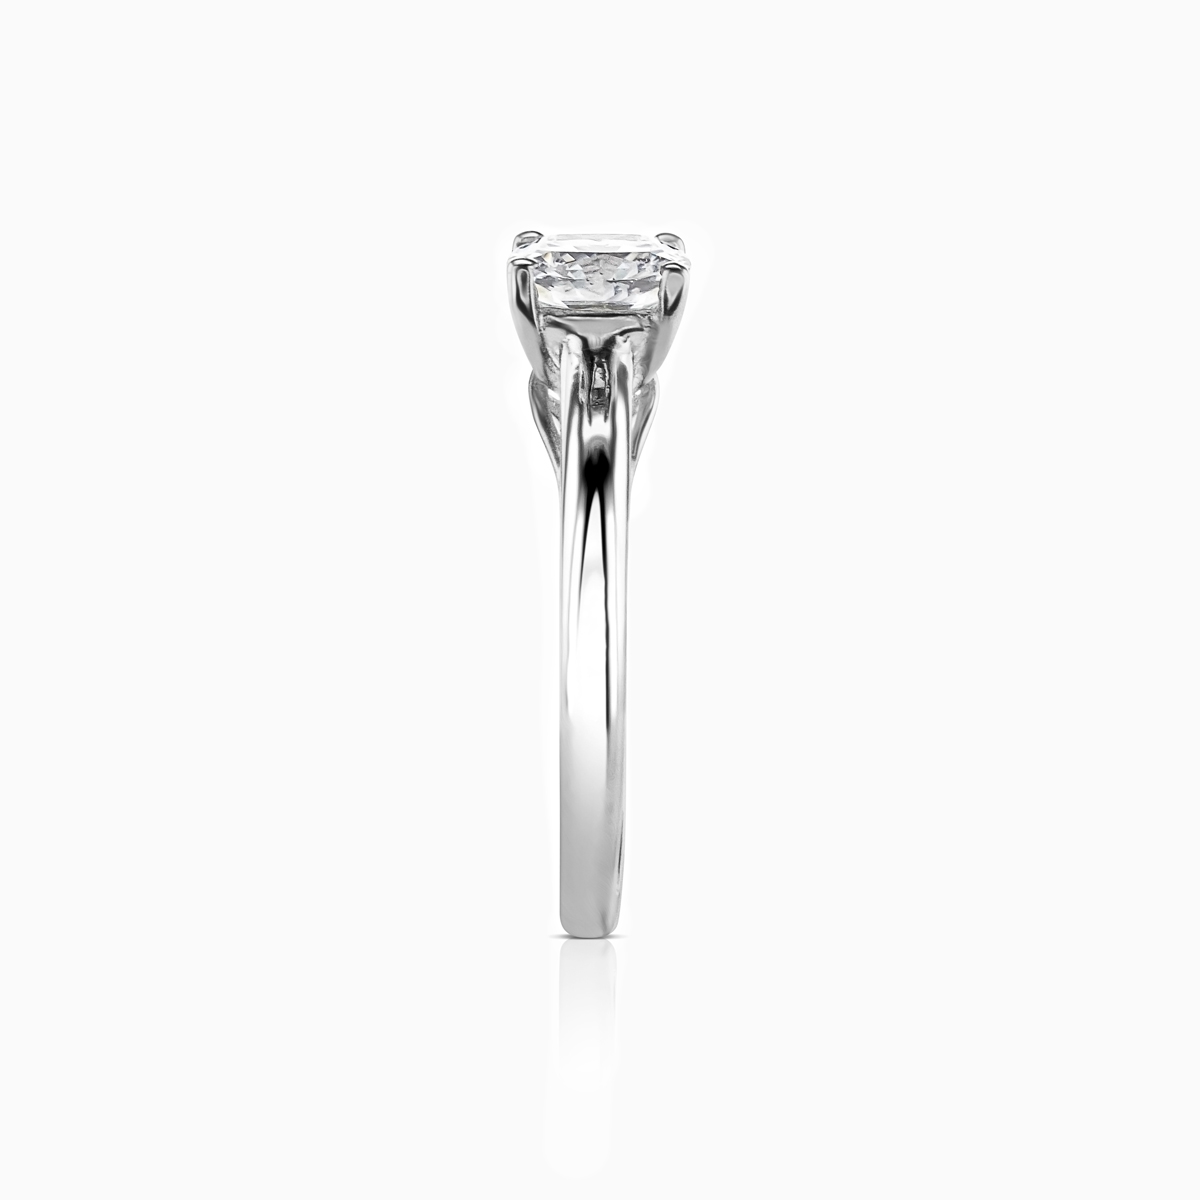 Dino Lonzano Cushion Cut Diamond Solitaire Engagement Ring